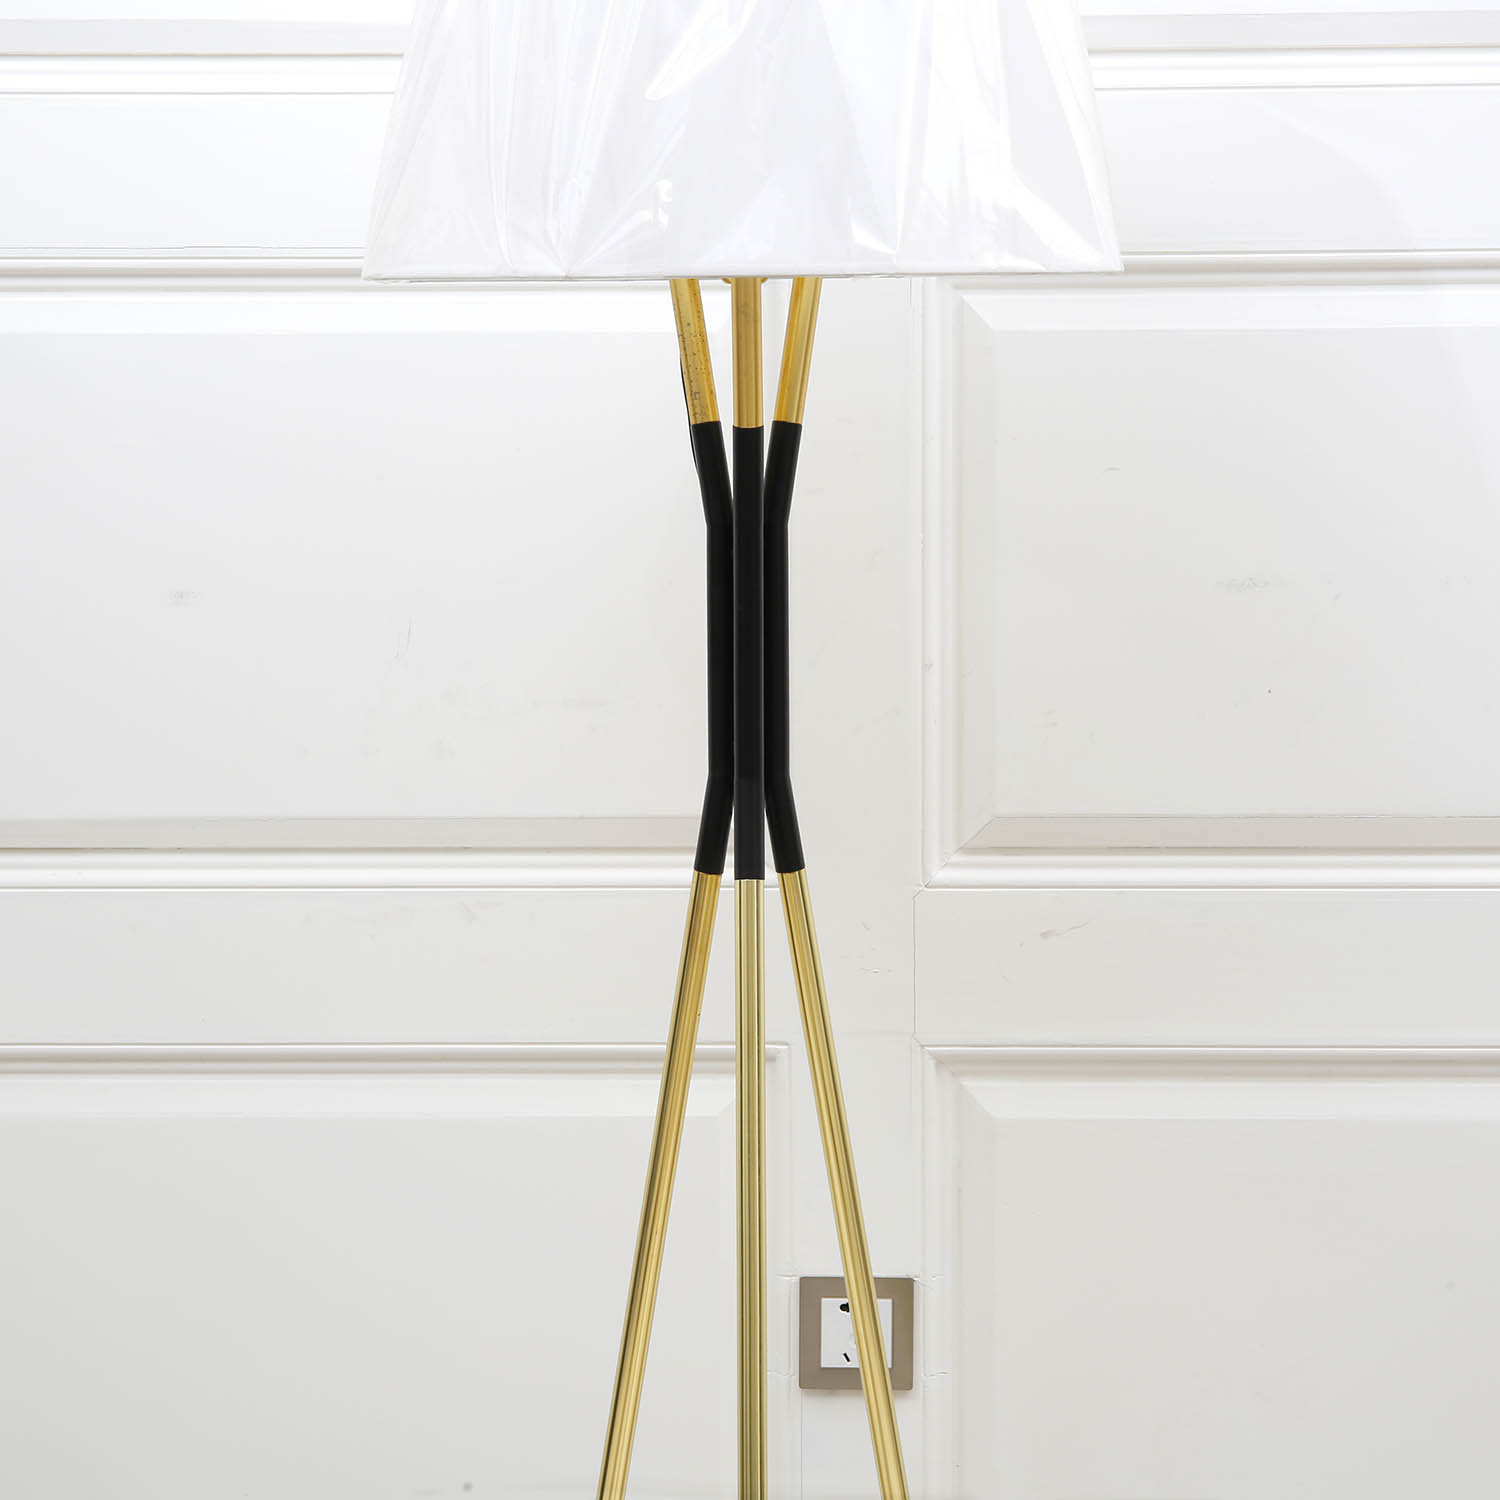 Regular White Golden Bedroom Studyroom Metal Floor Lamp (KA528-F)